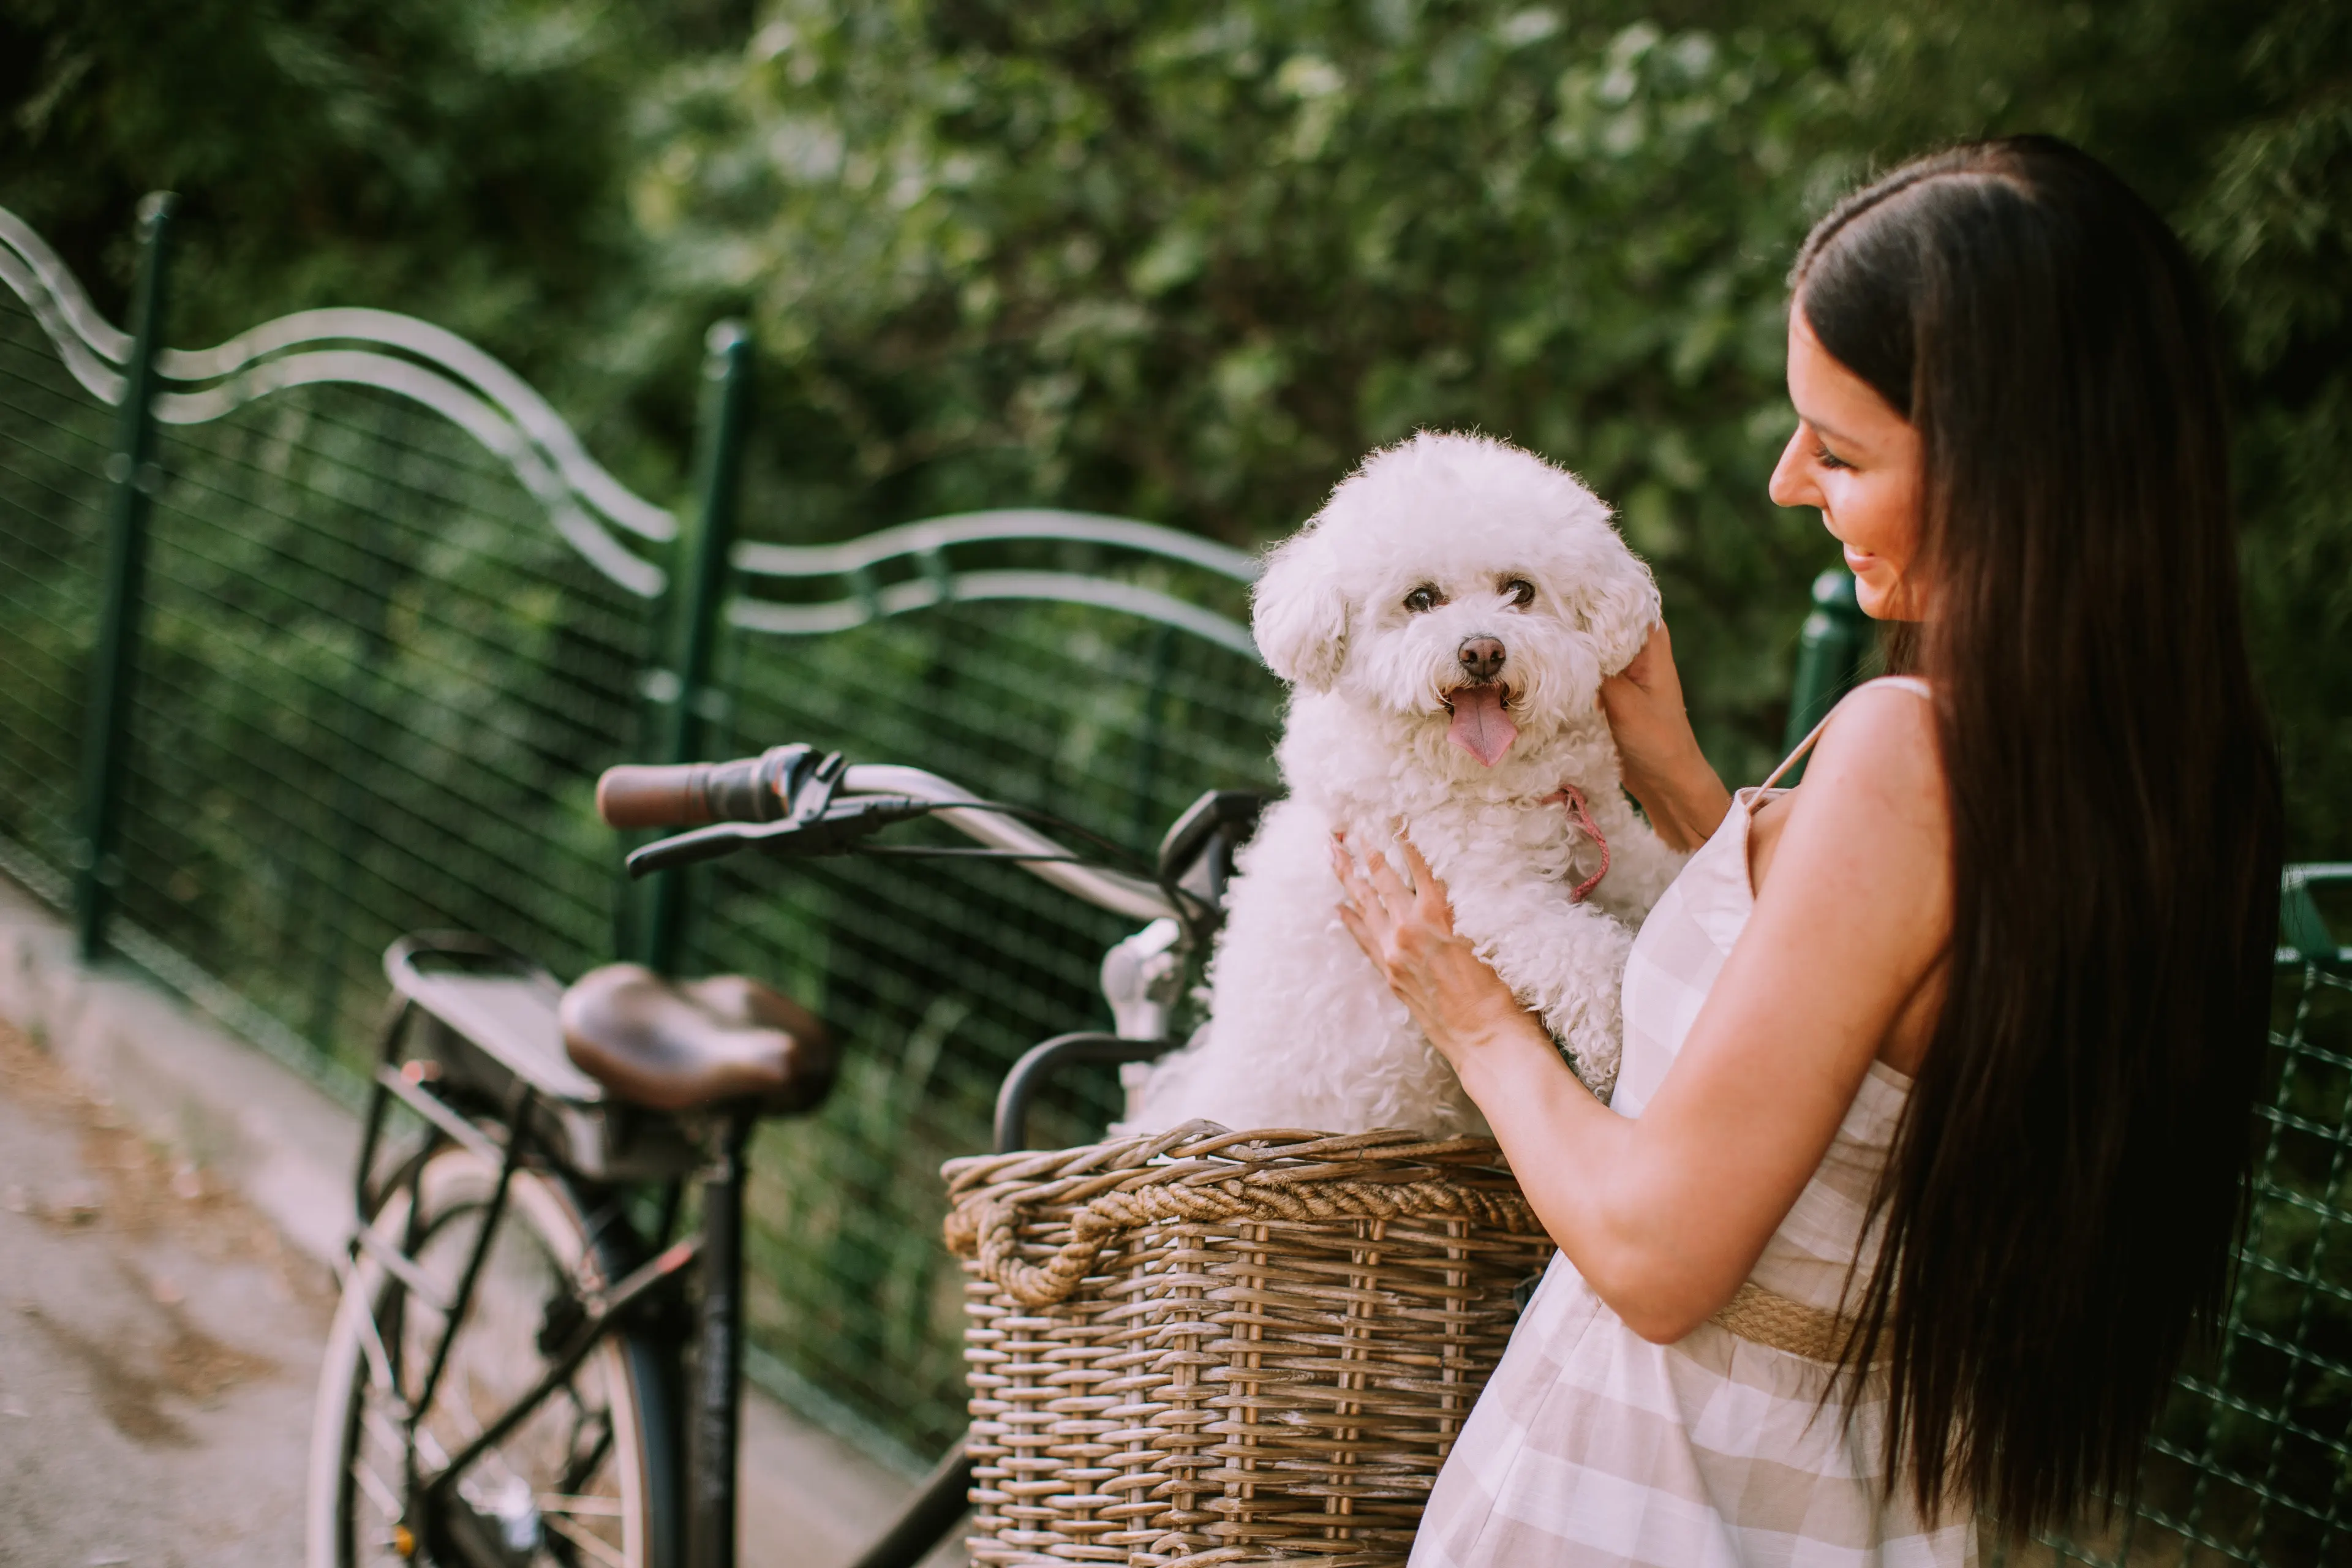 Woman with dog and bike